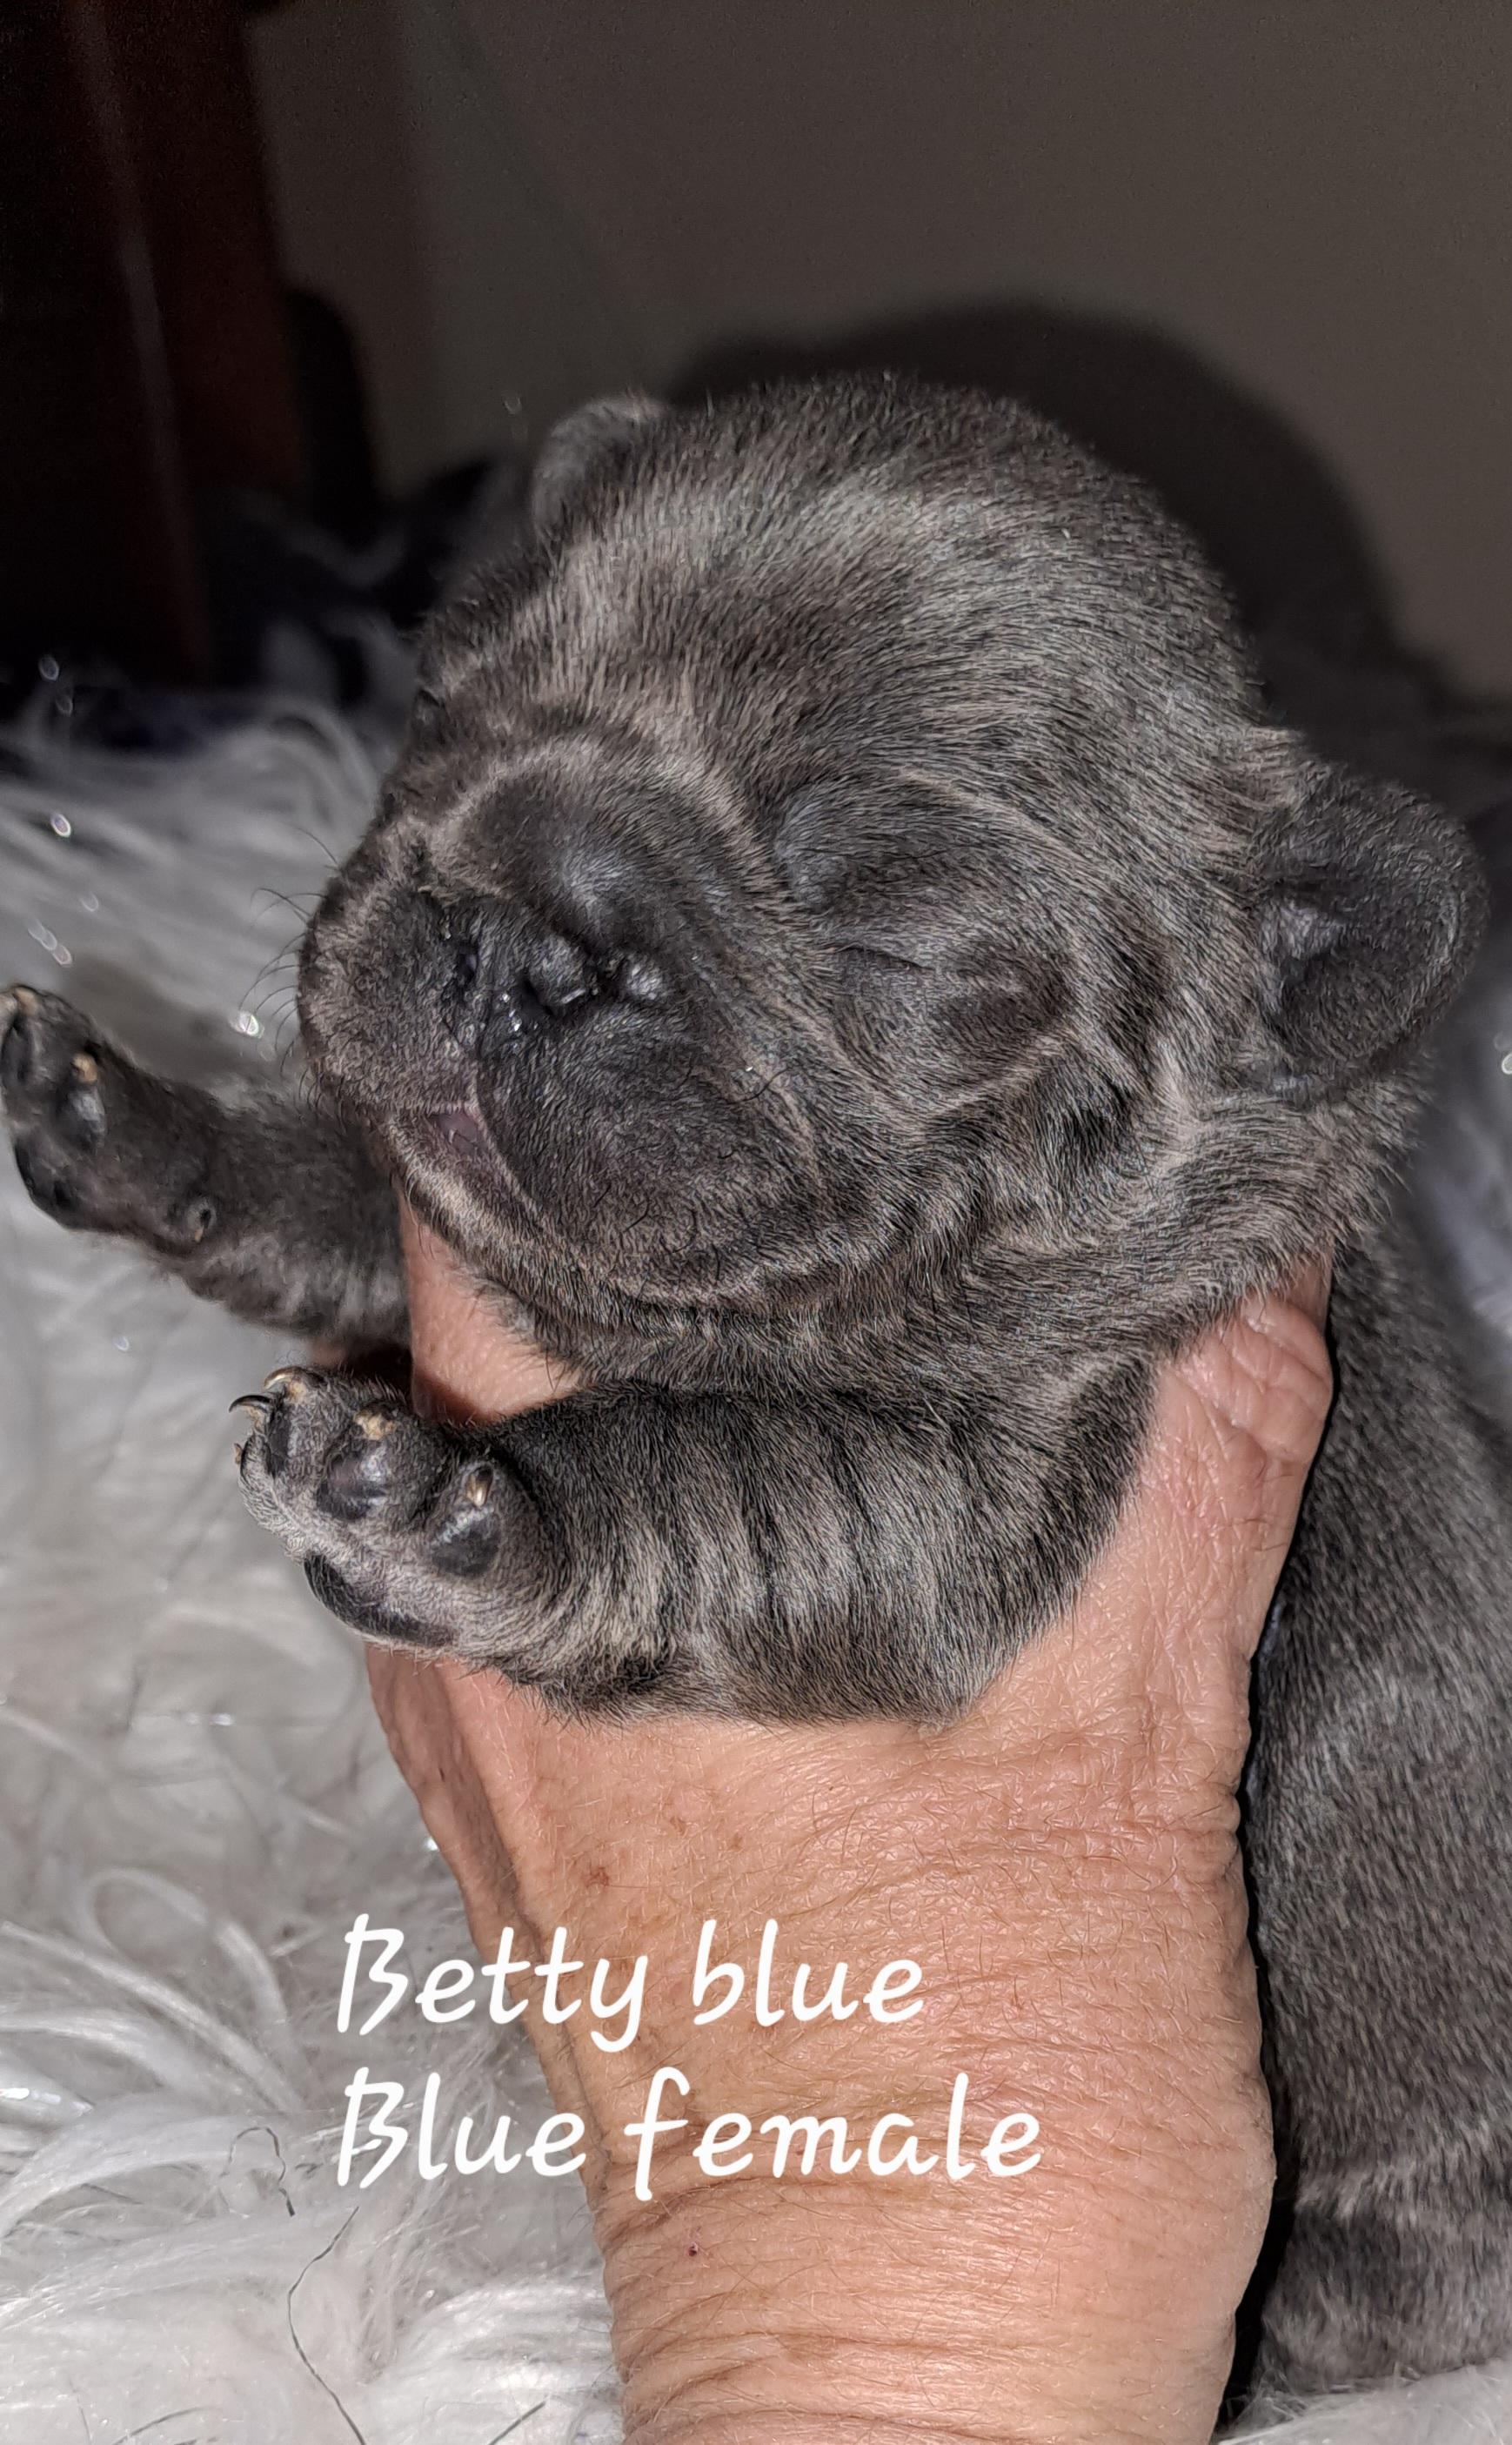 betty-blue-female-french-bulldog-south-africa